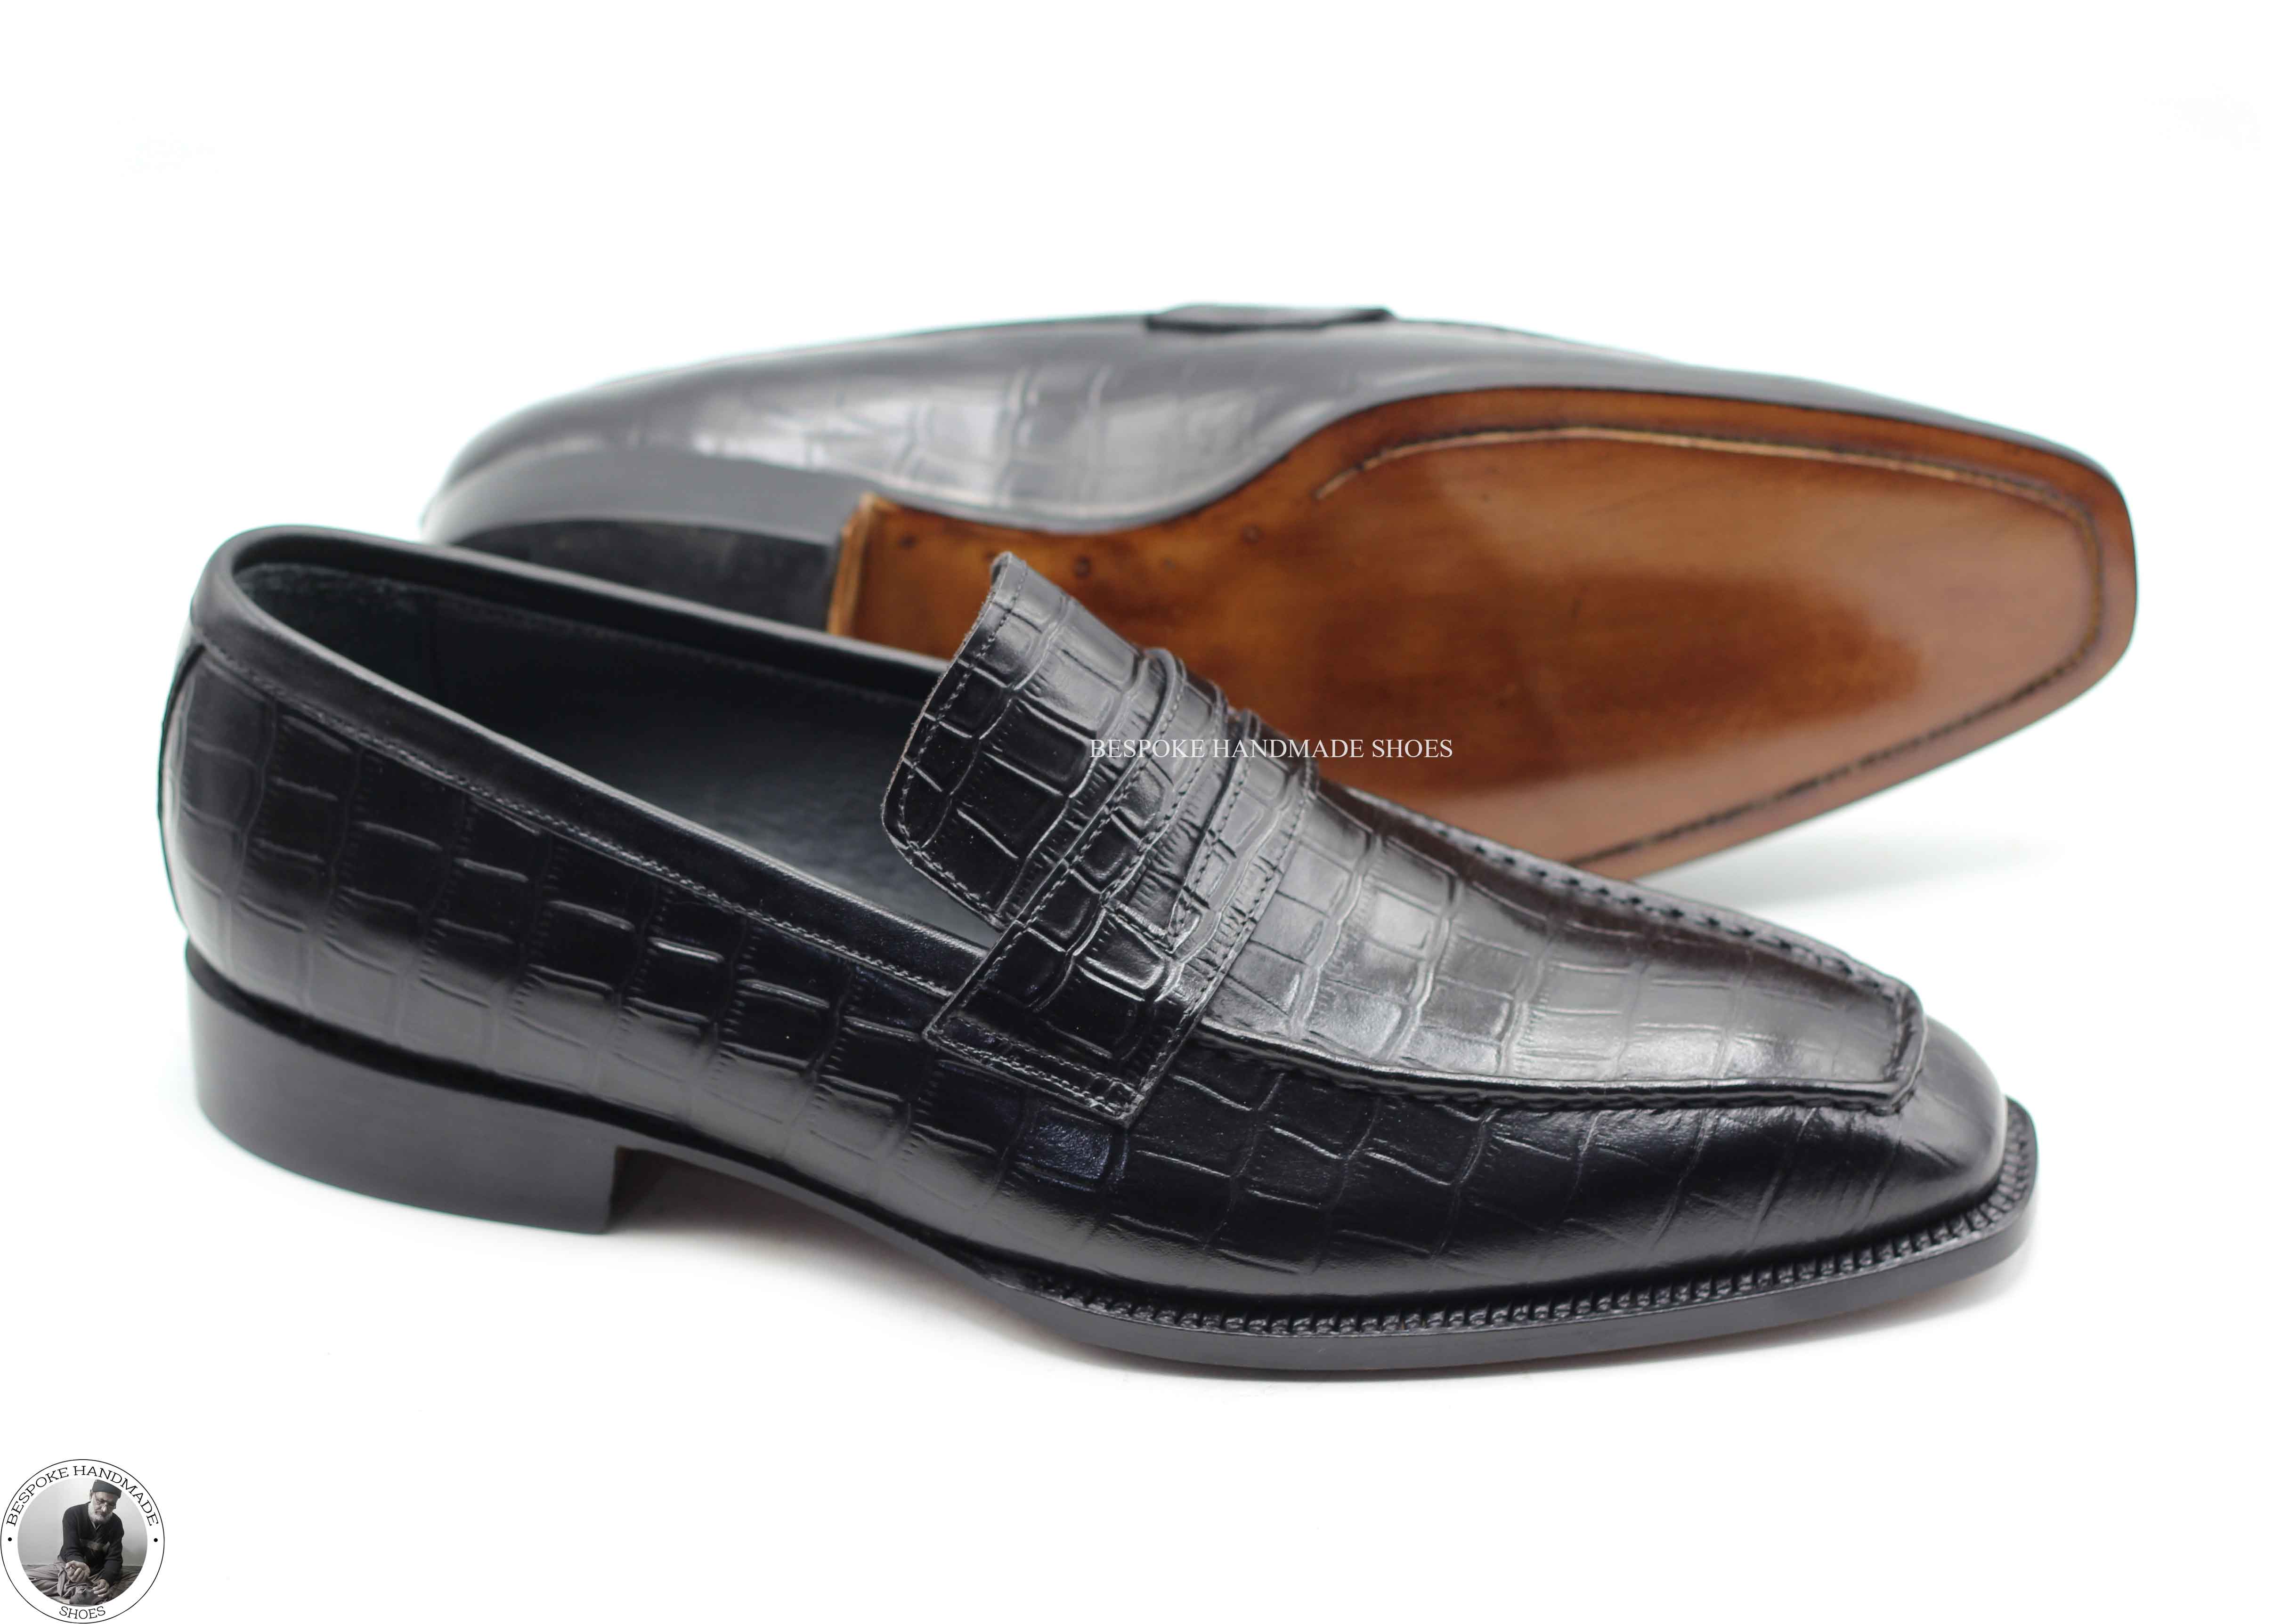 Bespoke Handmade Men's Black Leather Loafer Moccasin Slip On Casual Men's Shoes